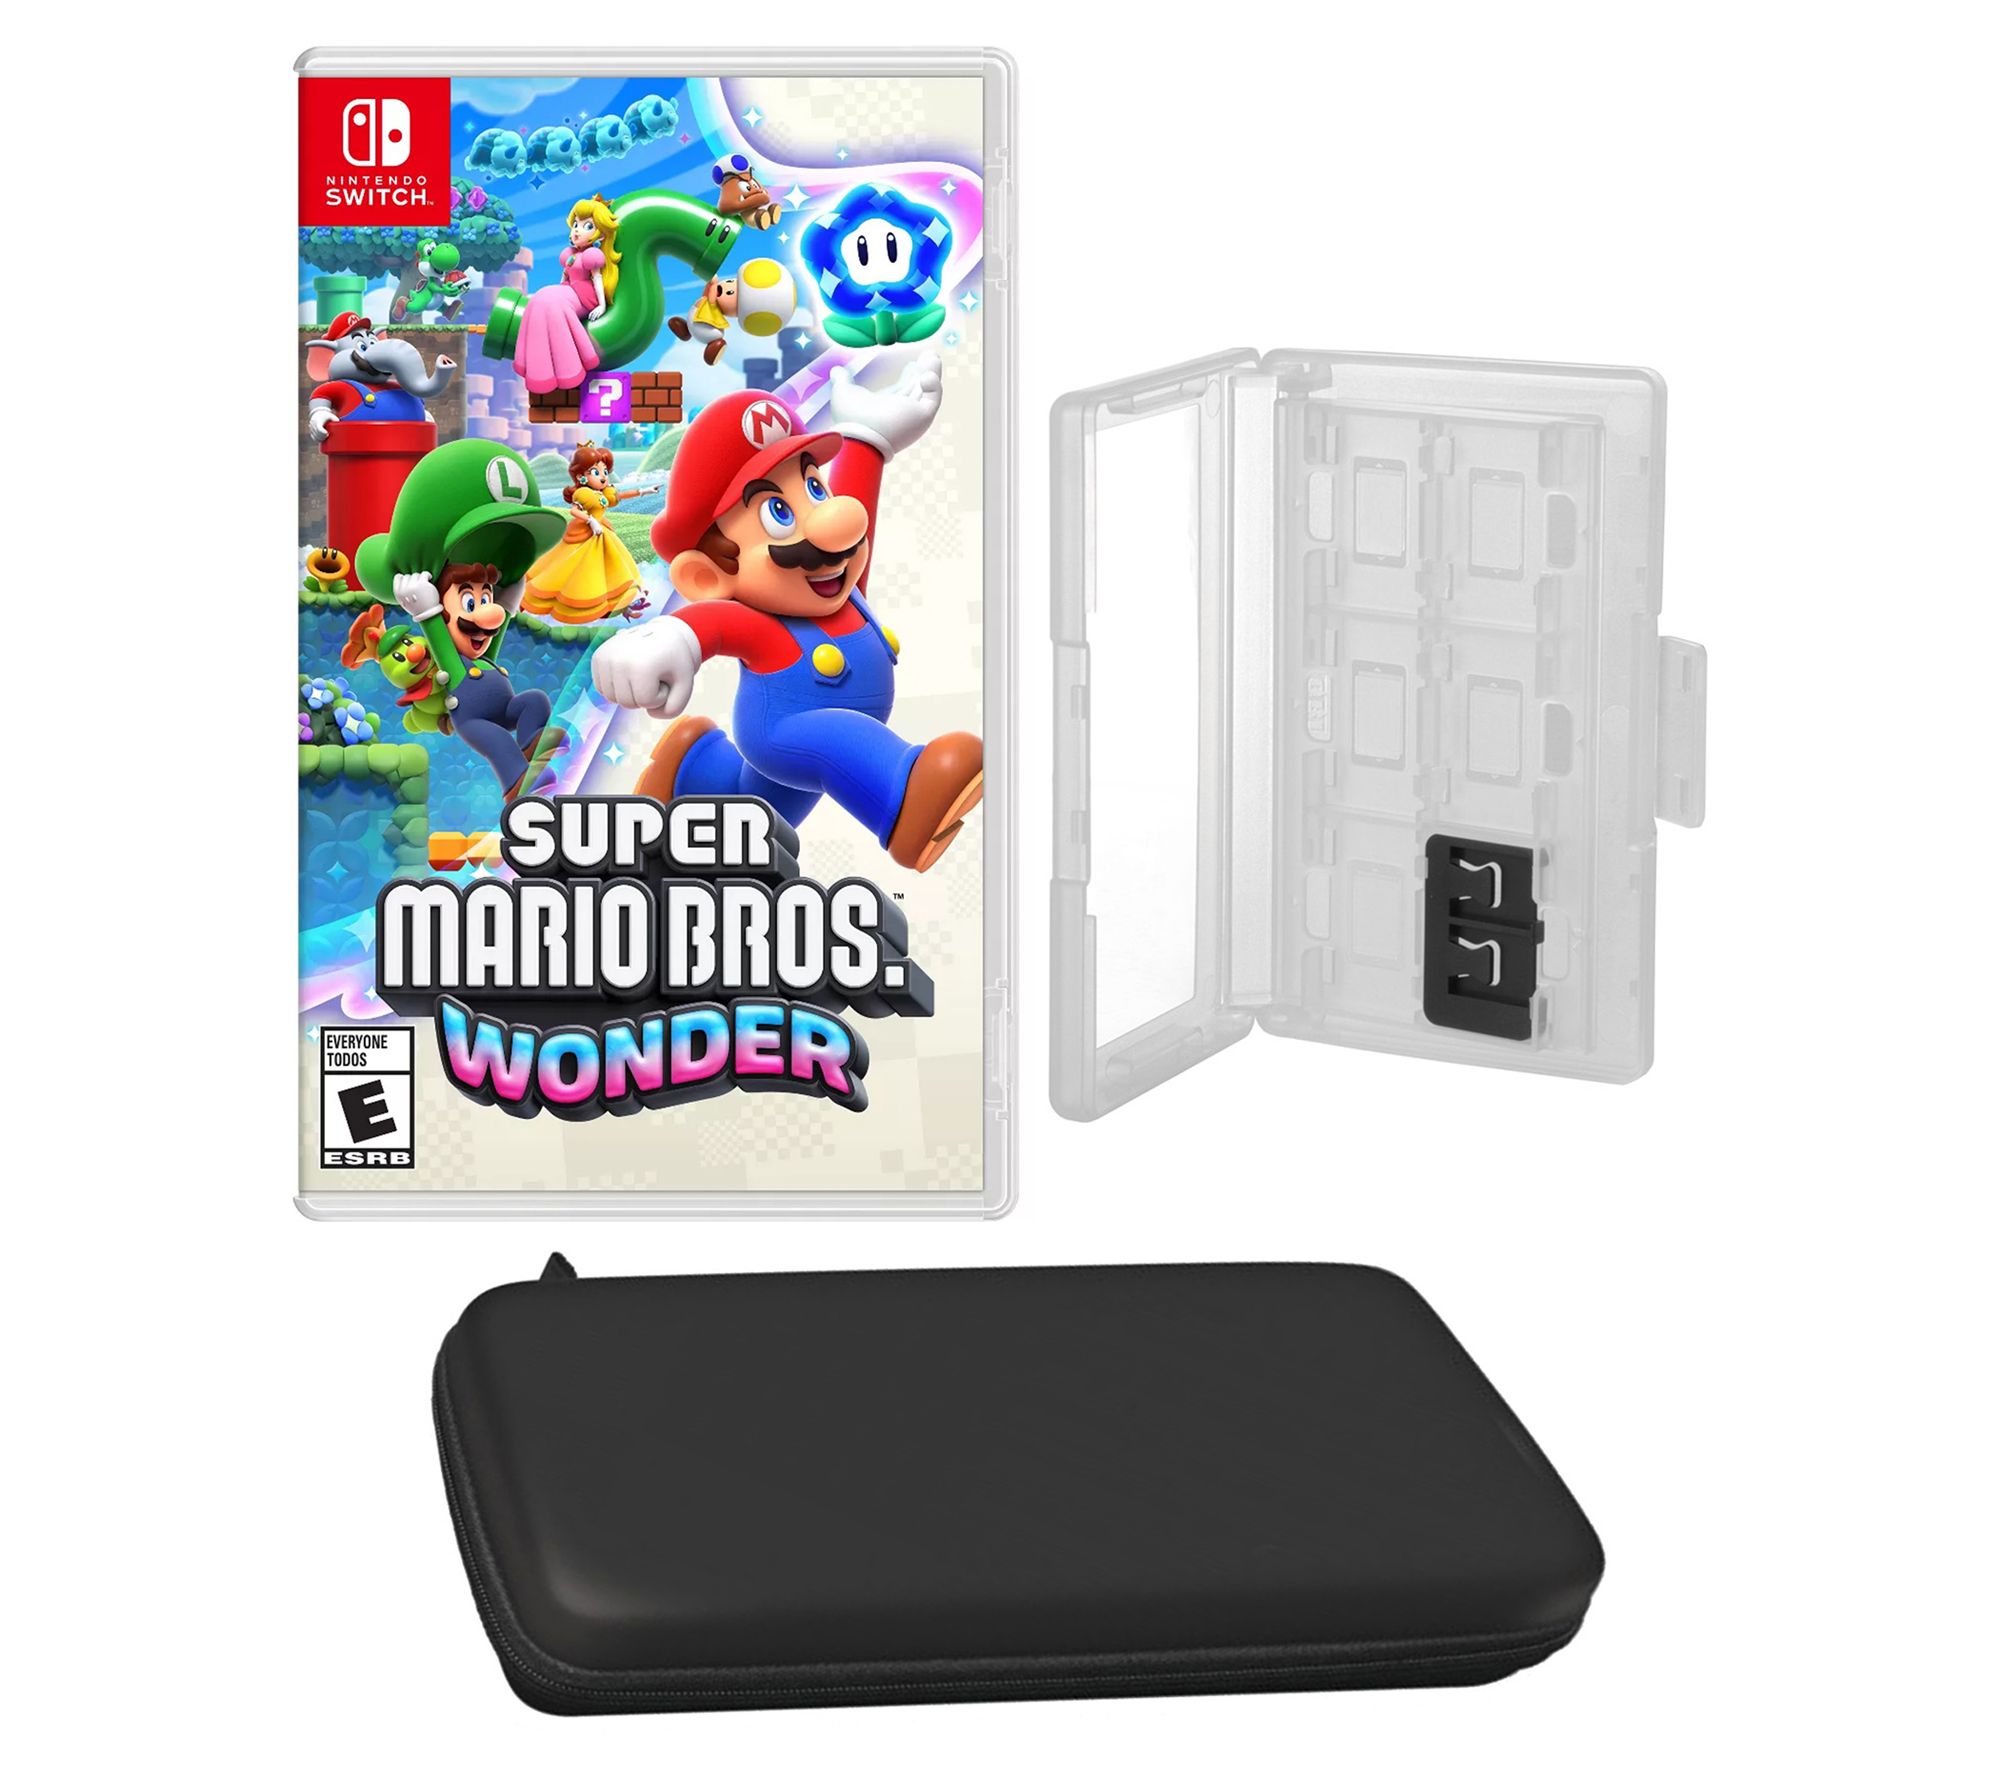 Super Mario Bros. Wonder - Nintendo Switch - U.S. Edition 